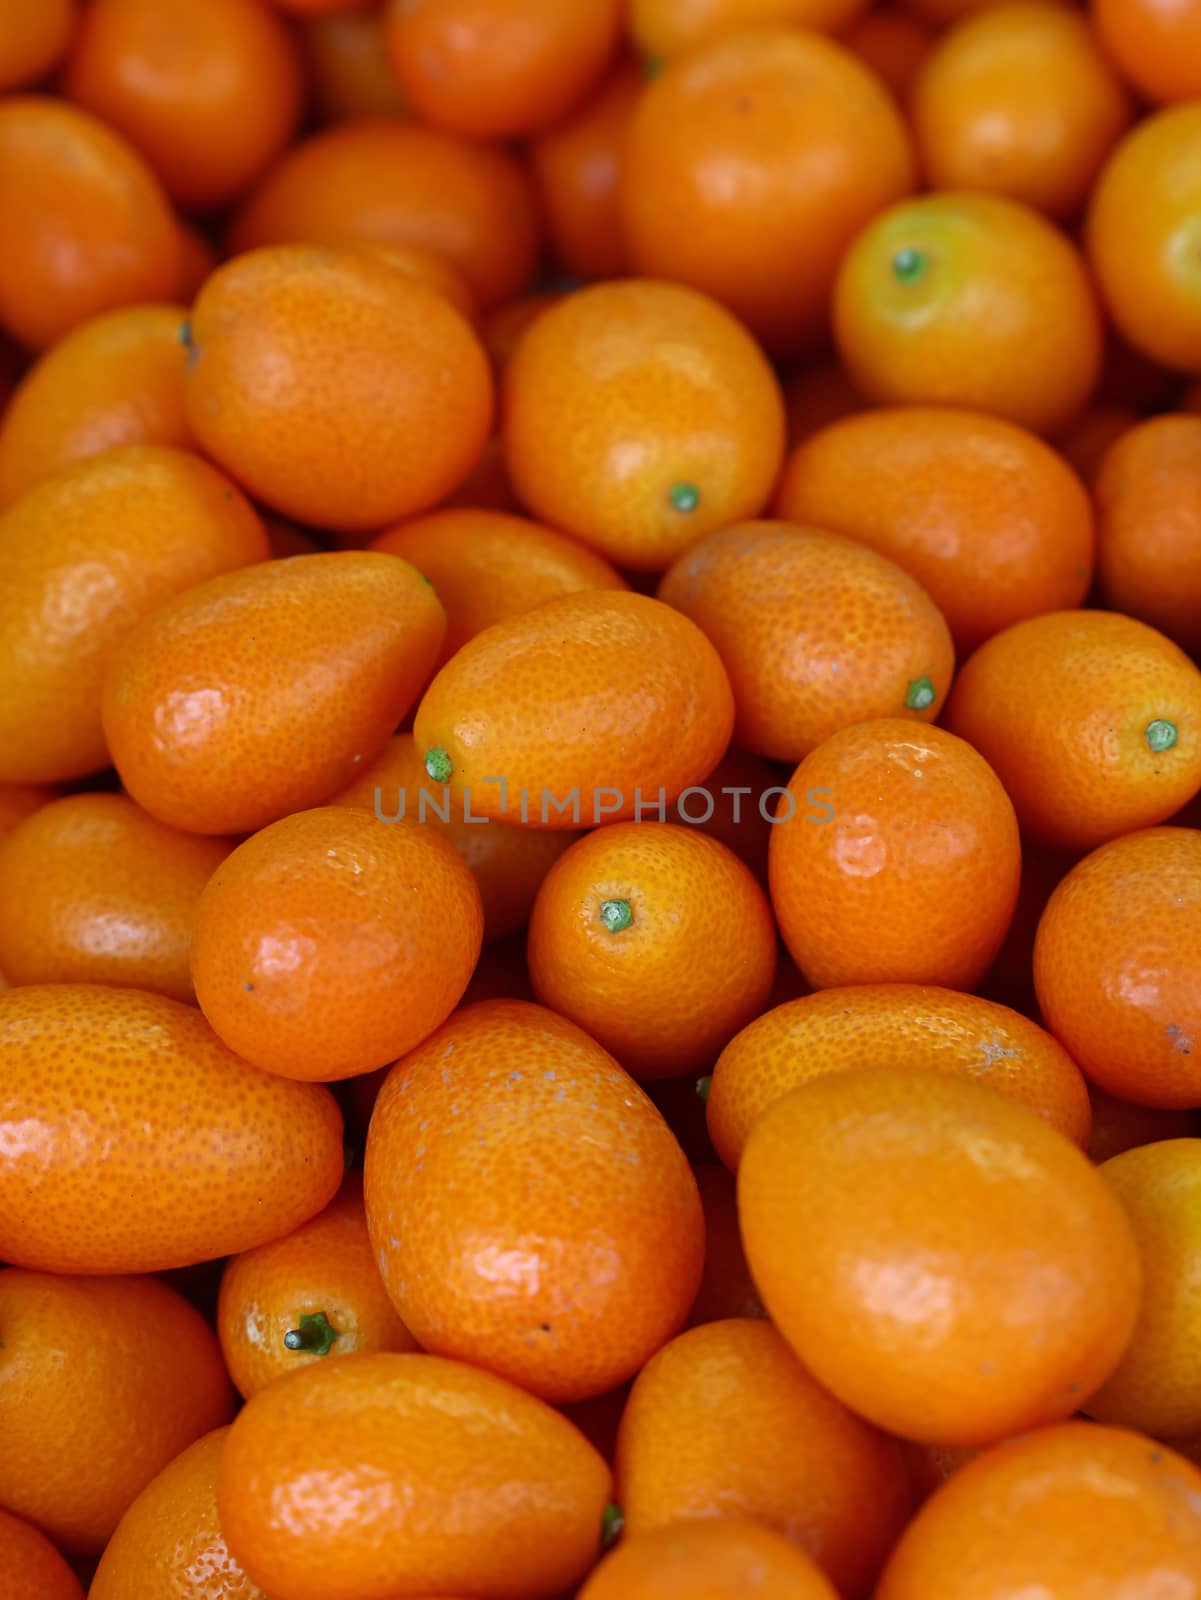 Fresh ripe orange cumquat citrus fruits on retail market display, close up, high angle view